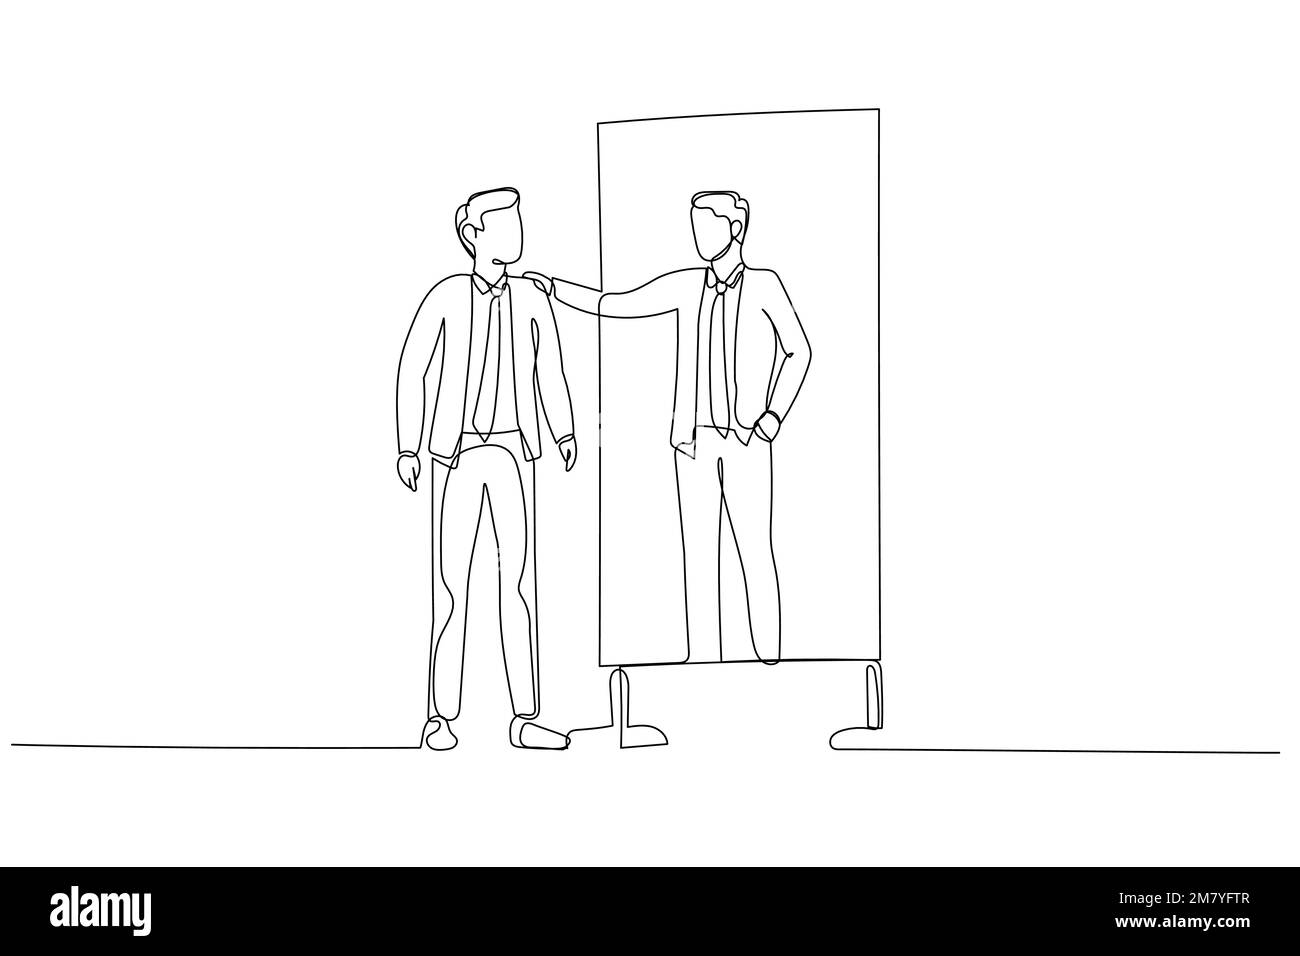 Illustration of businessman looking into mirror embrace self concept of self esteem self care. Single line art style design Stock Vector